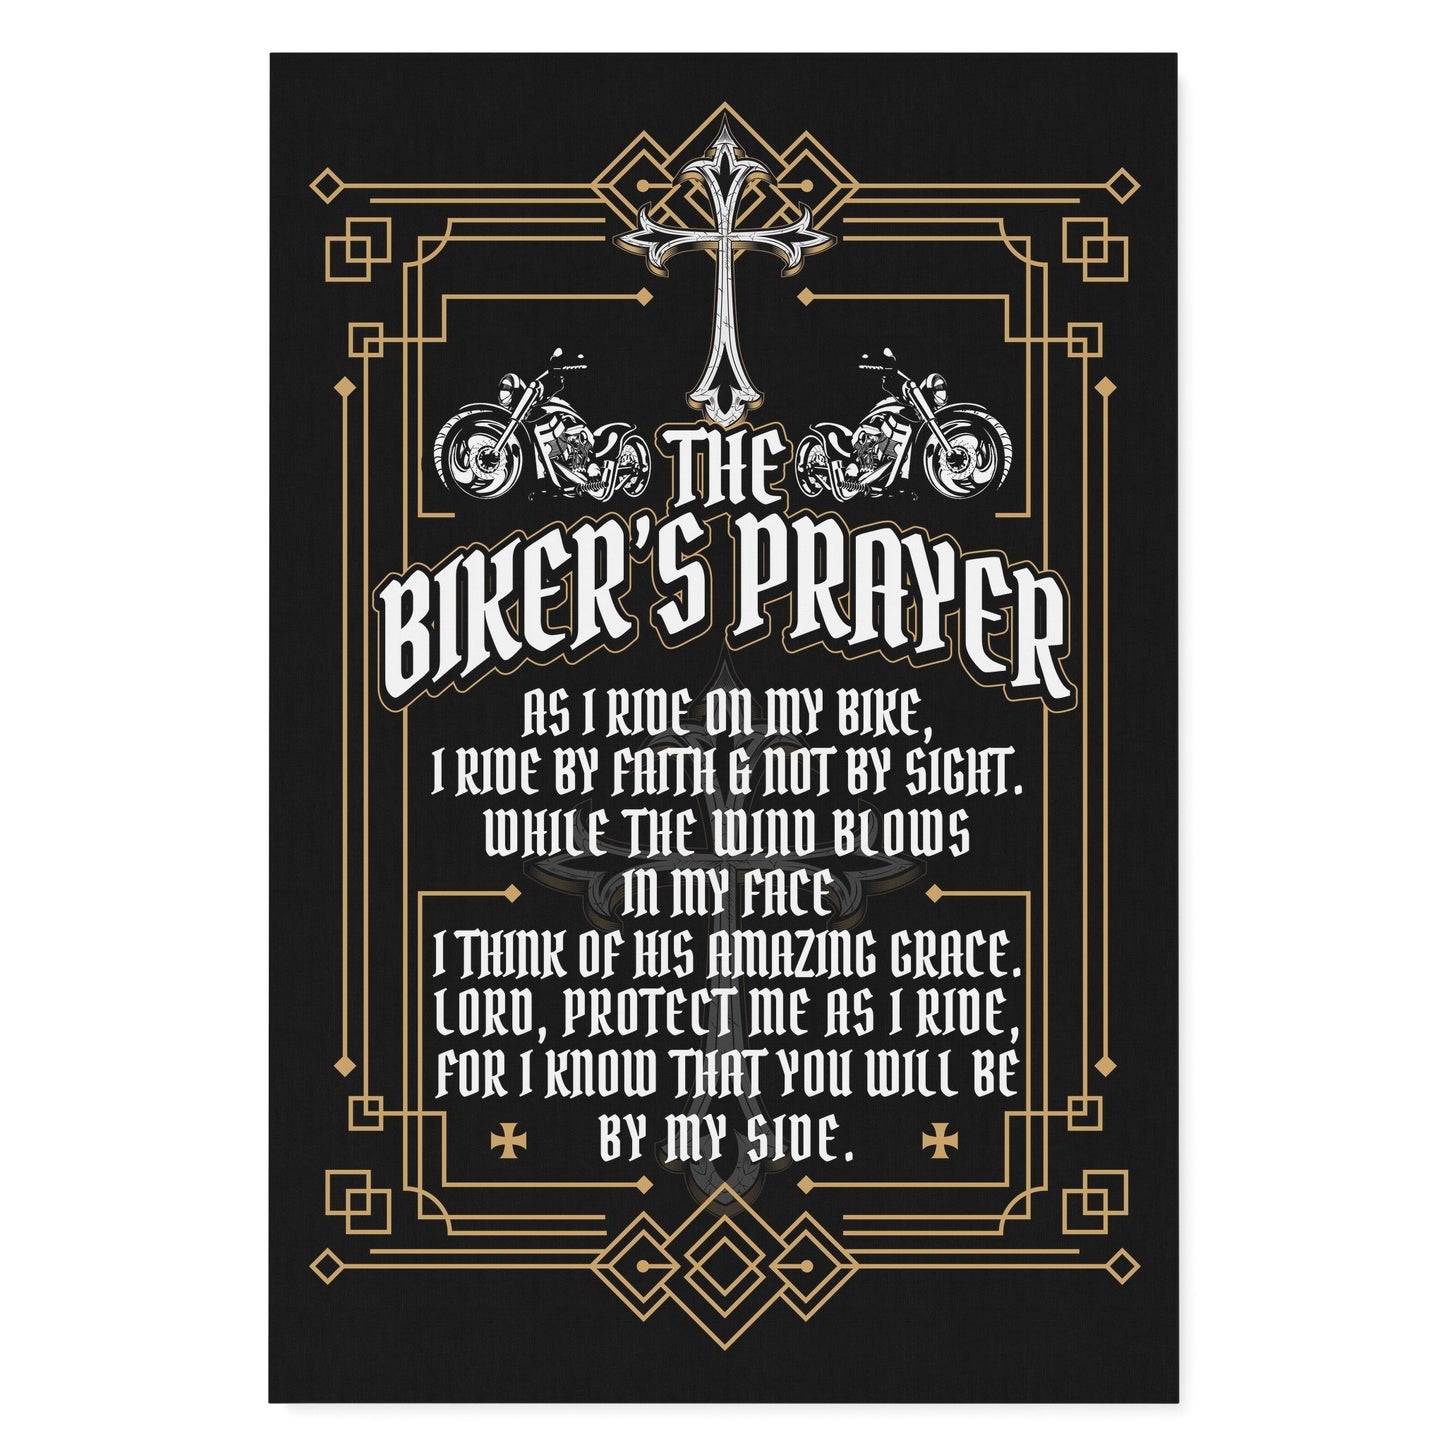 Biker Prayer Premium Wall Canvas